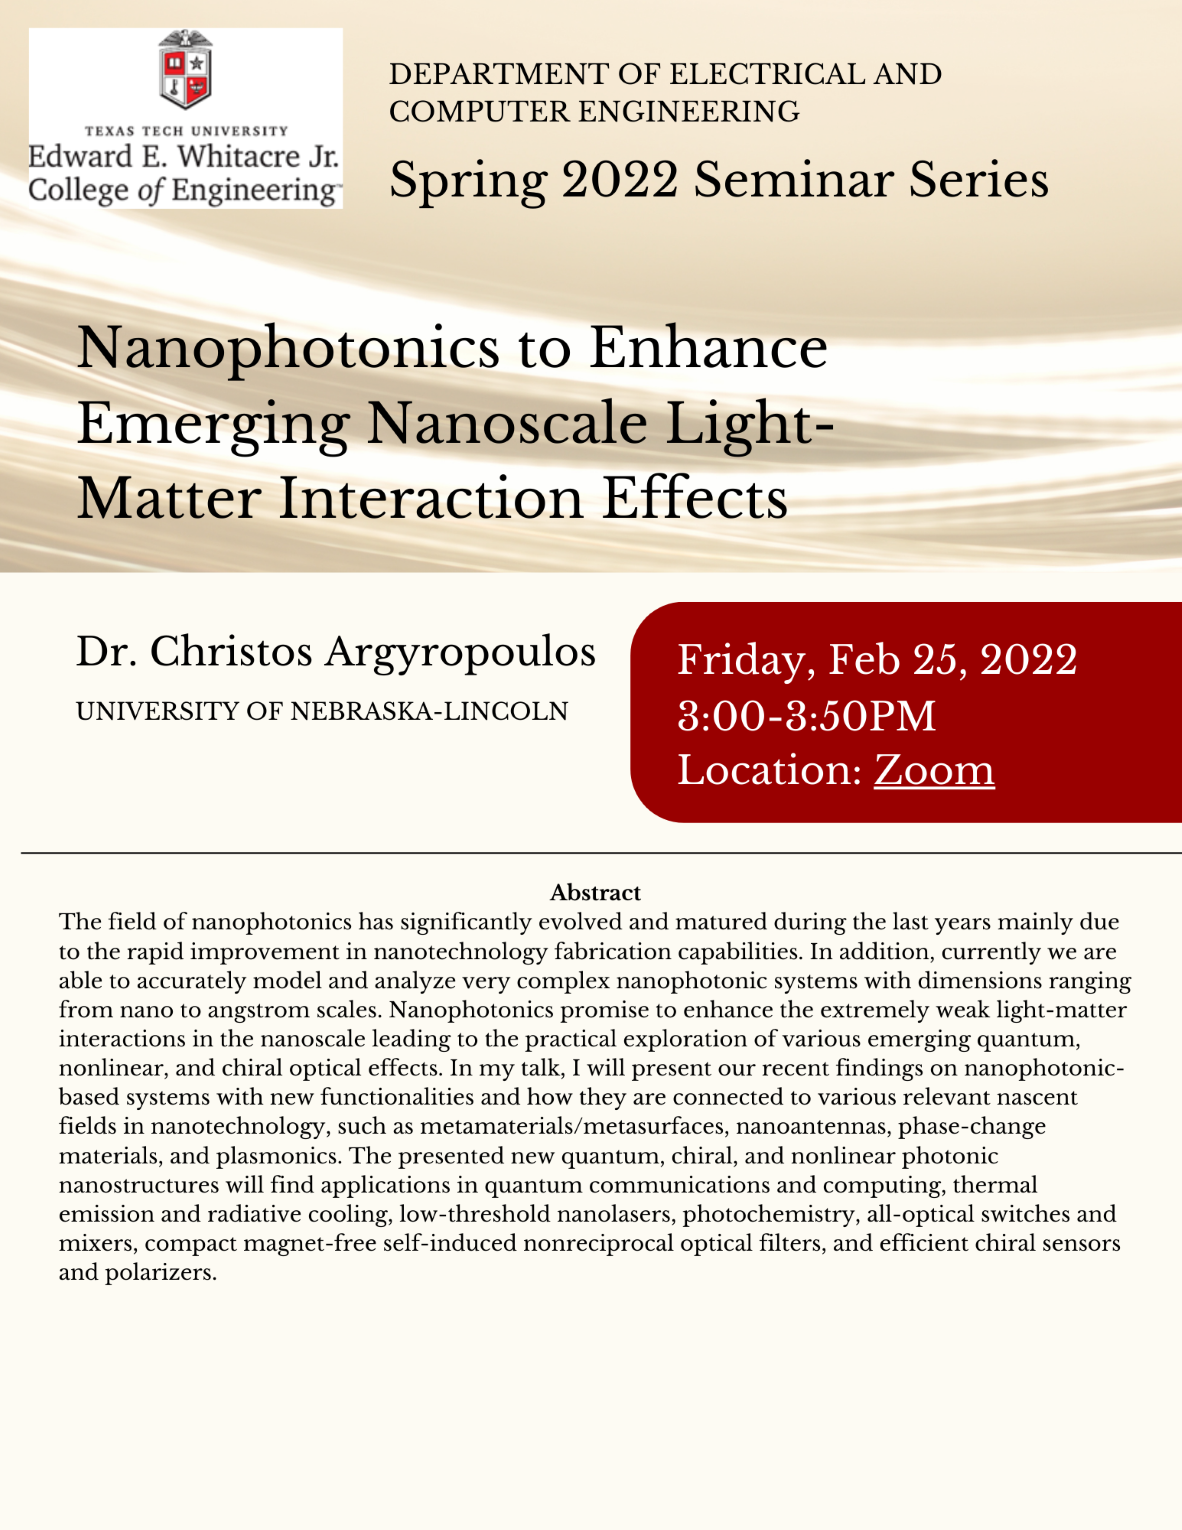 Nanophotonics to Enhance Emerging Nanoscale Light-Matter Interaction Effects